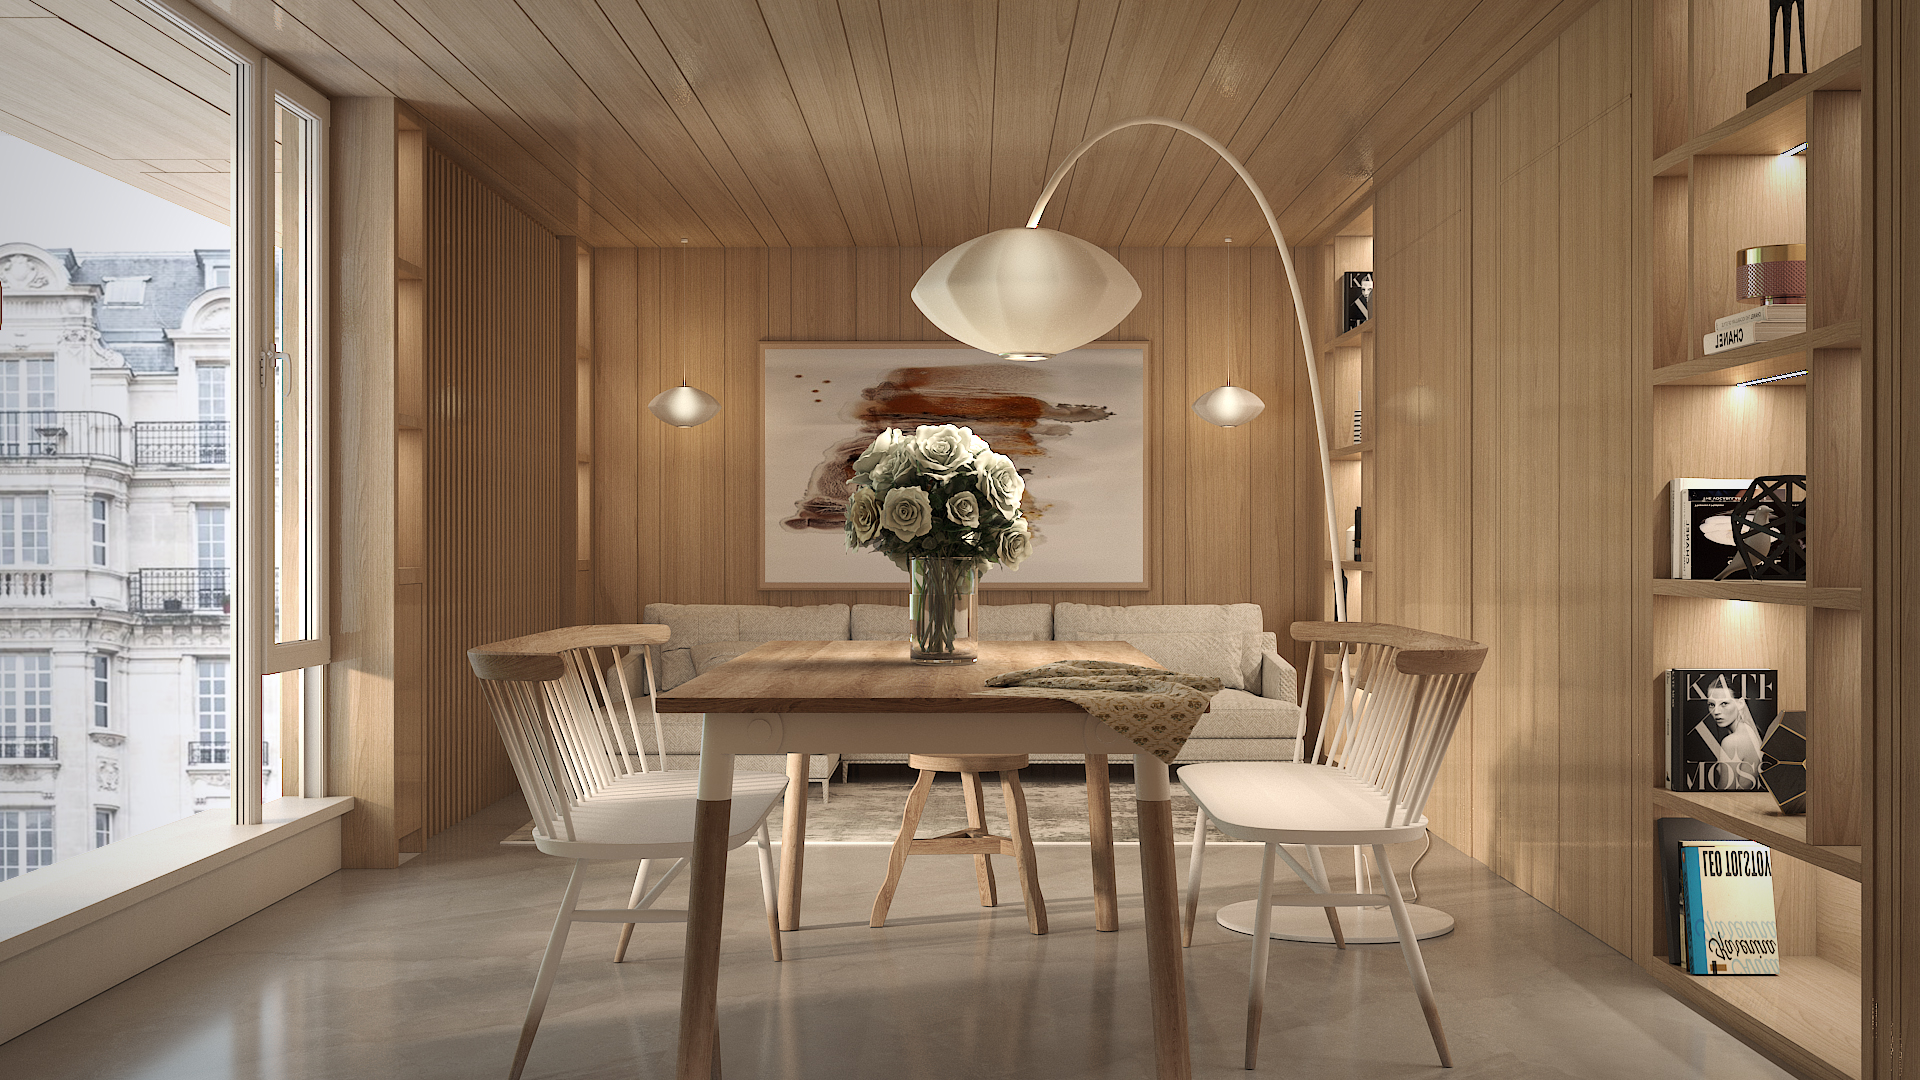 Wood-clad warm neutral interior by Homilo